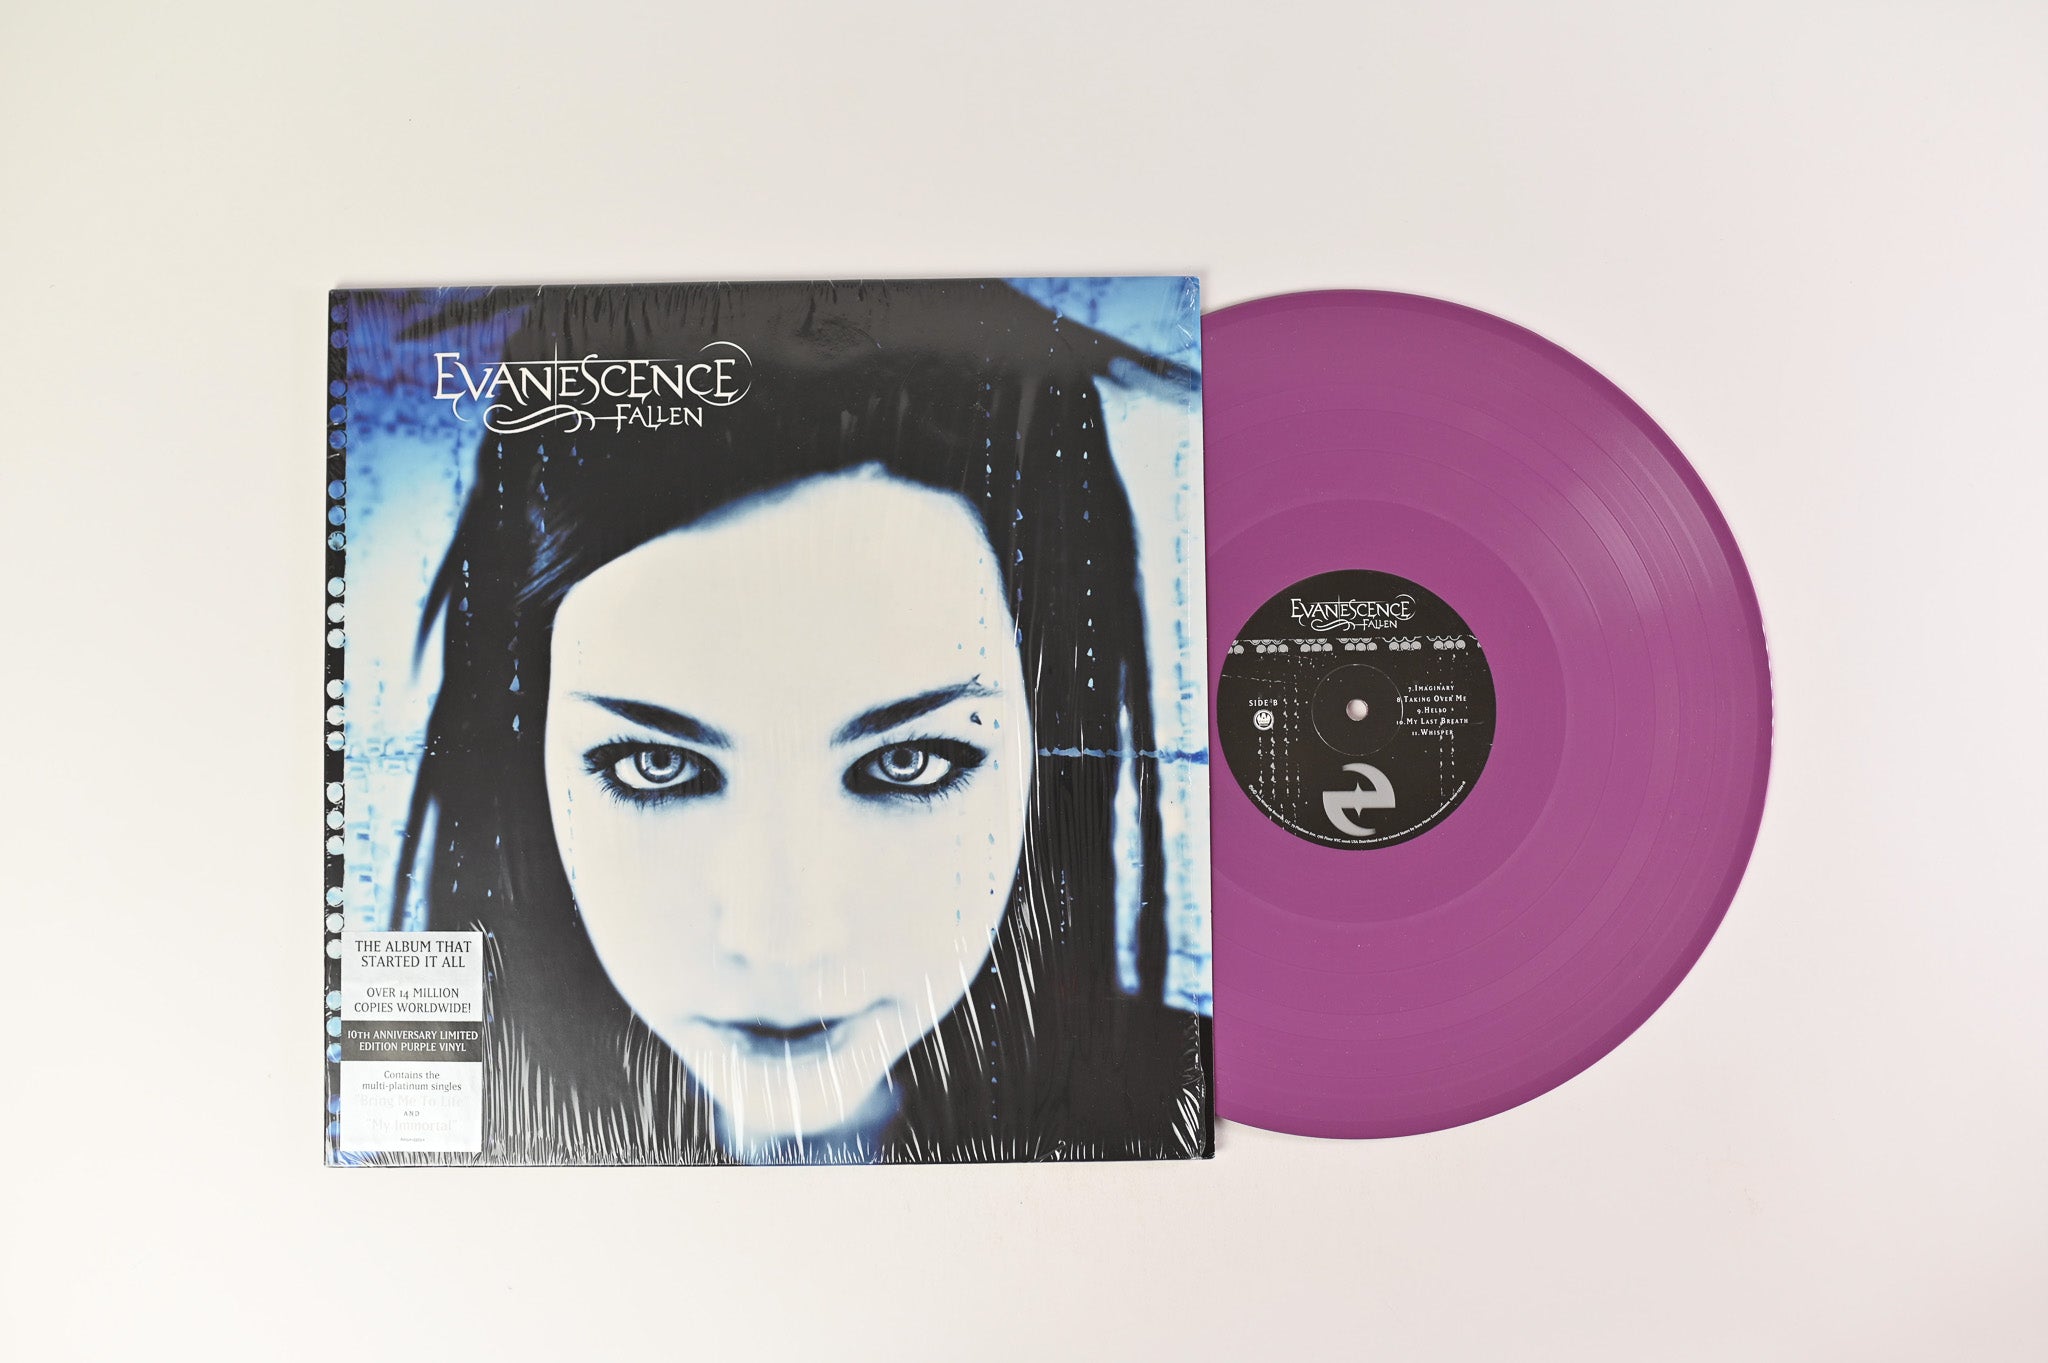 Evanescence - Fallen on Wind Up Ltd Purple Vinyl Reissue